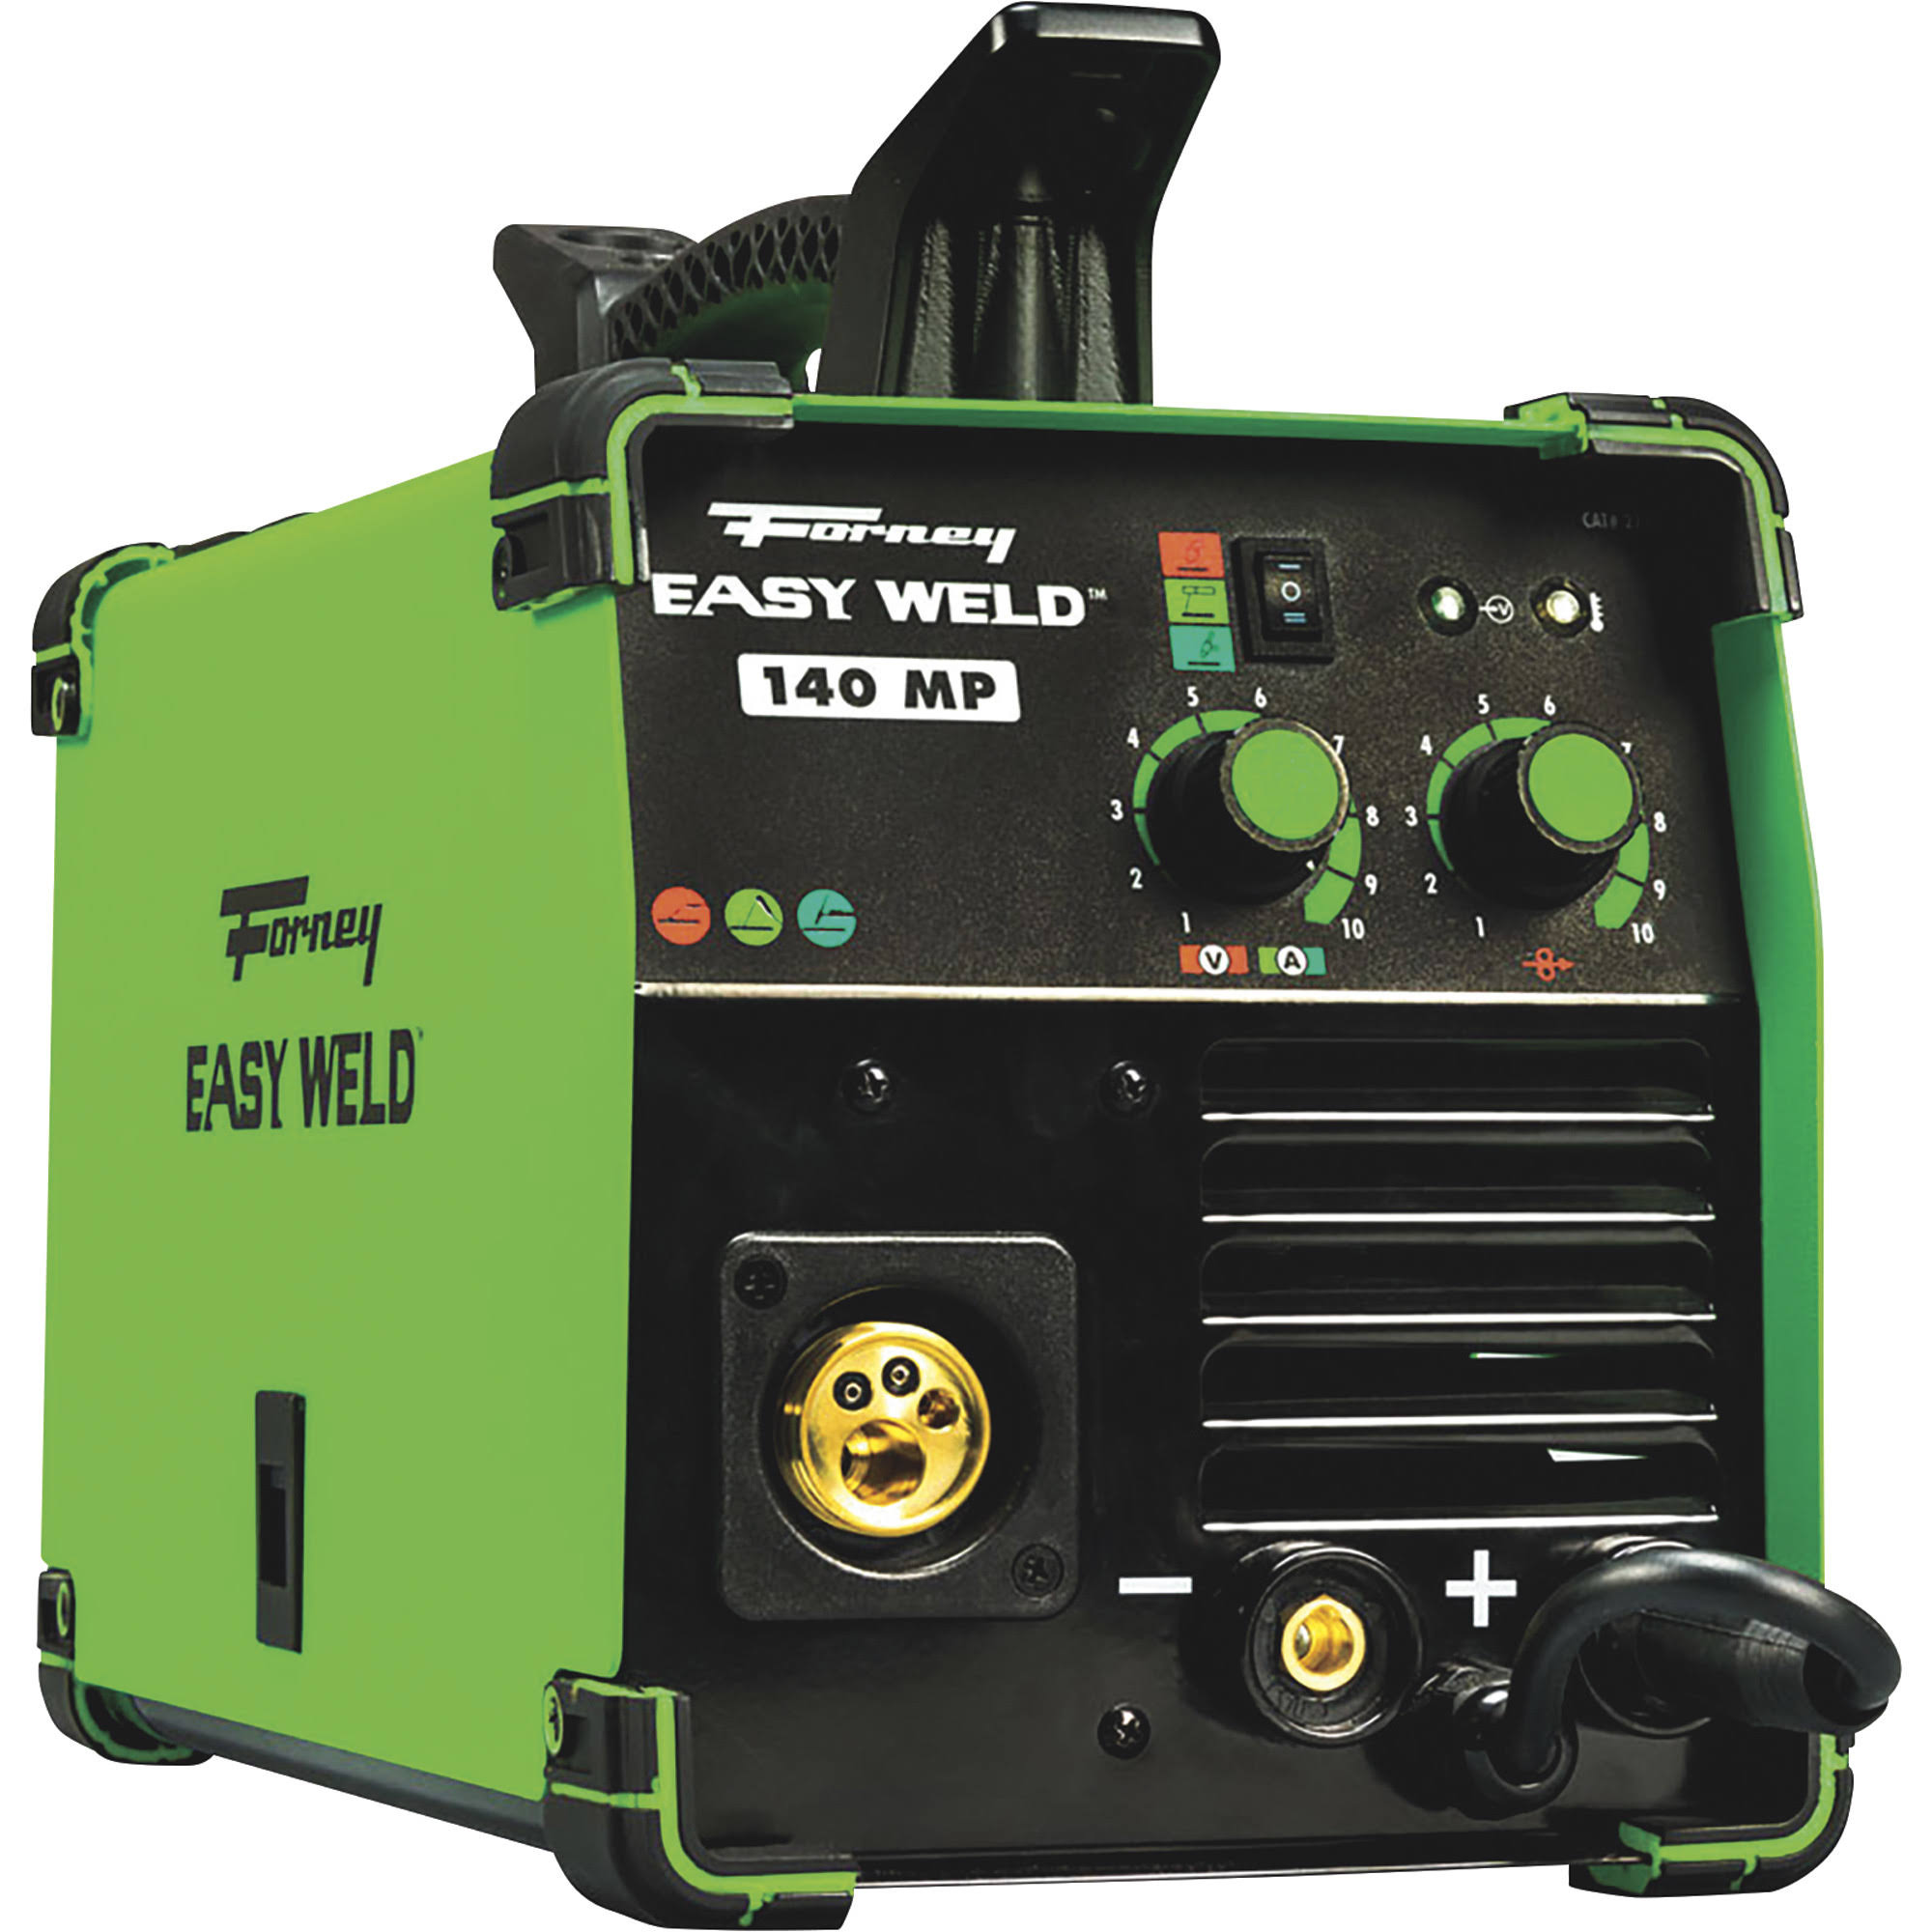 Forney Easy Weld 271 Multi Process Welder - 140 Amp